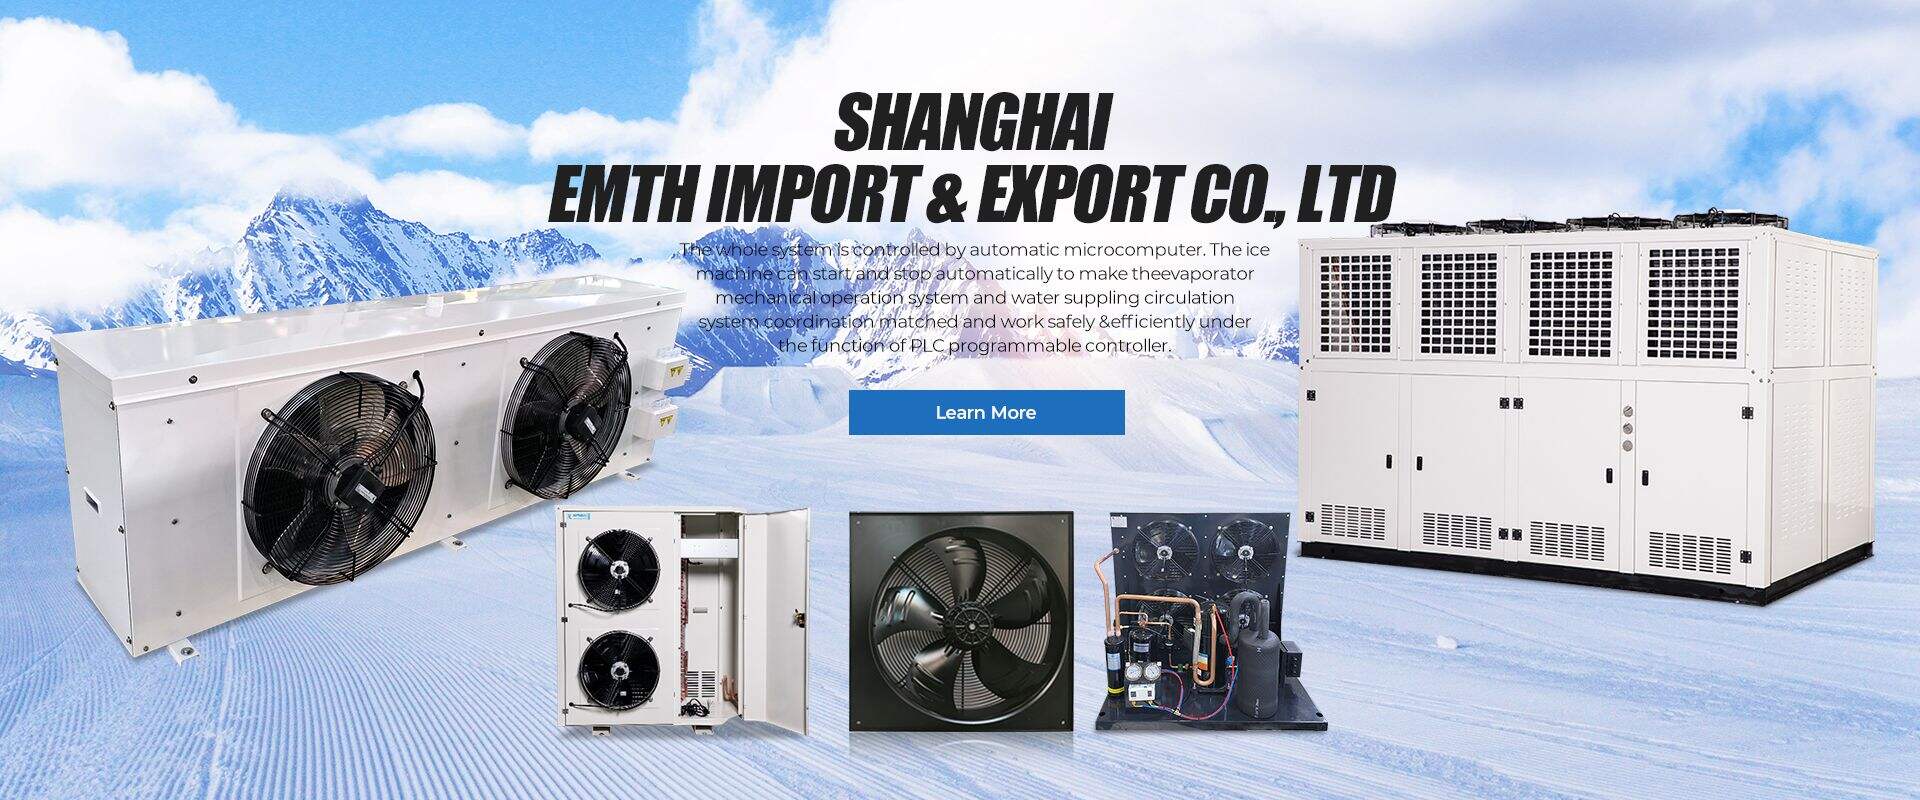 Shanghai EMTH Import & Export Co, LTD